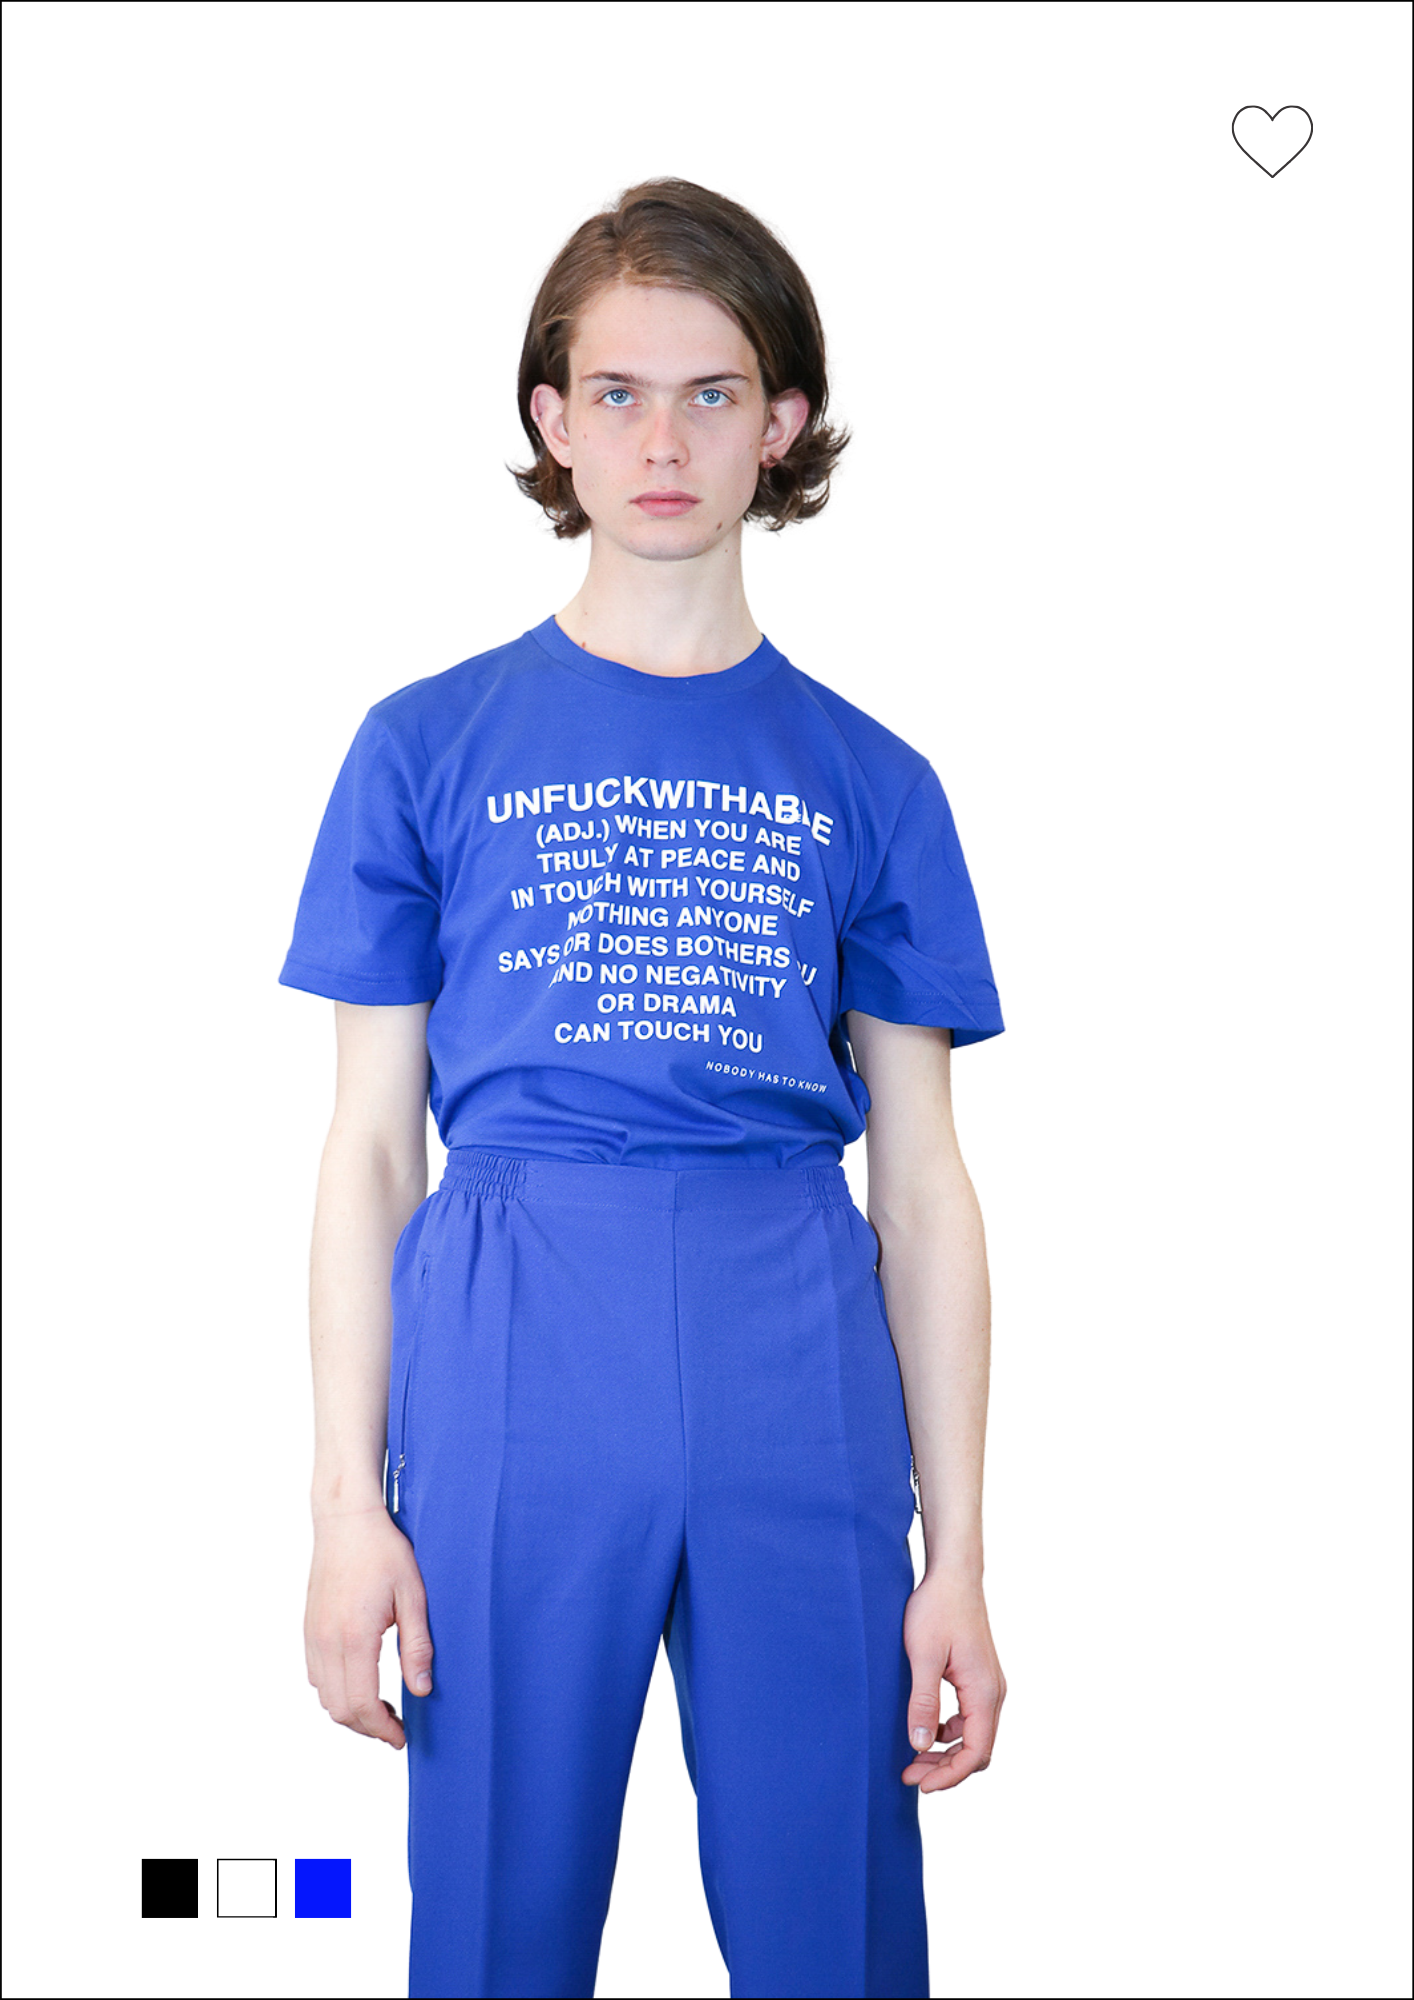 Unfuckwithable (E) - t-shirt blue